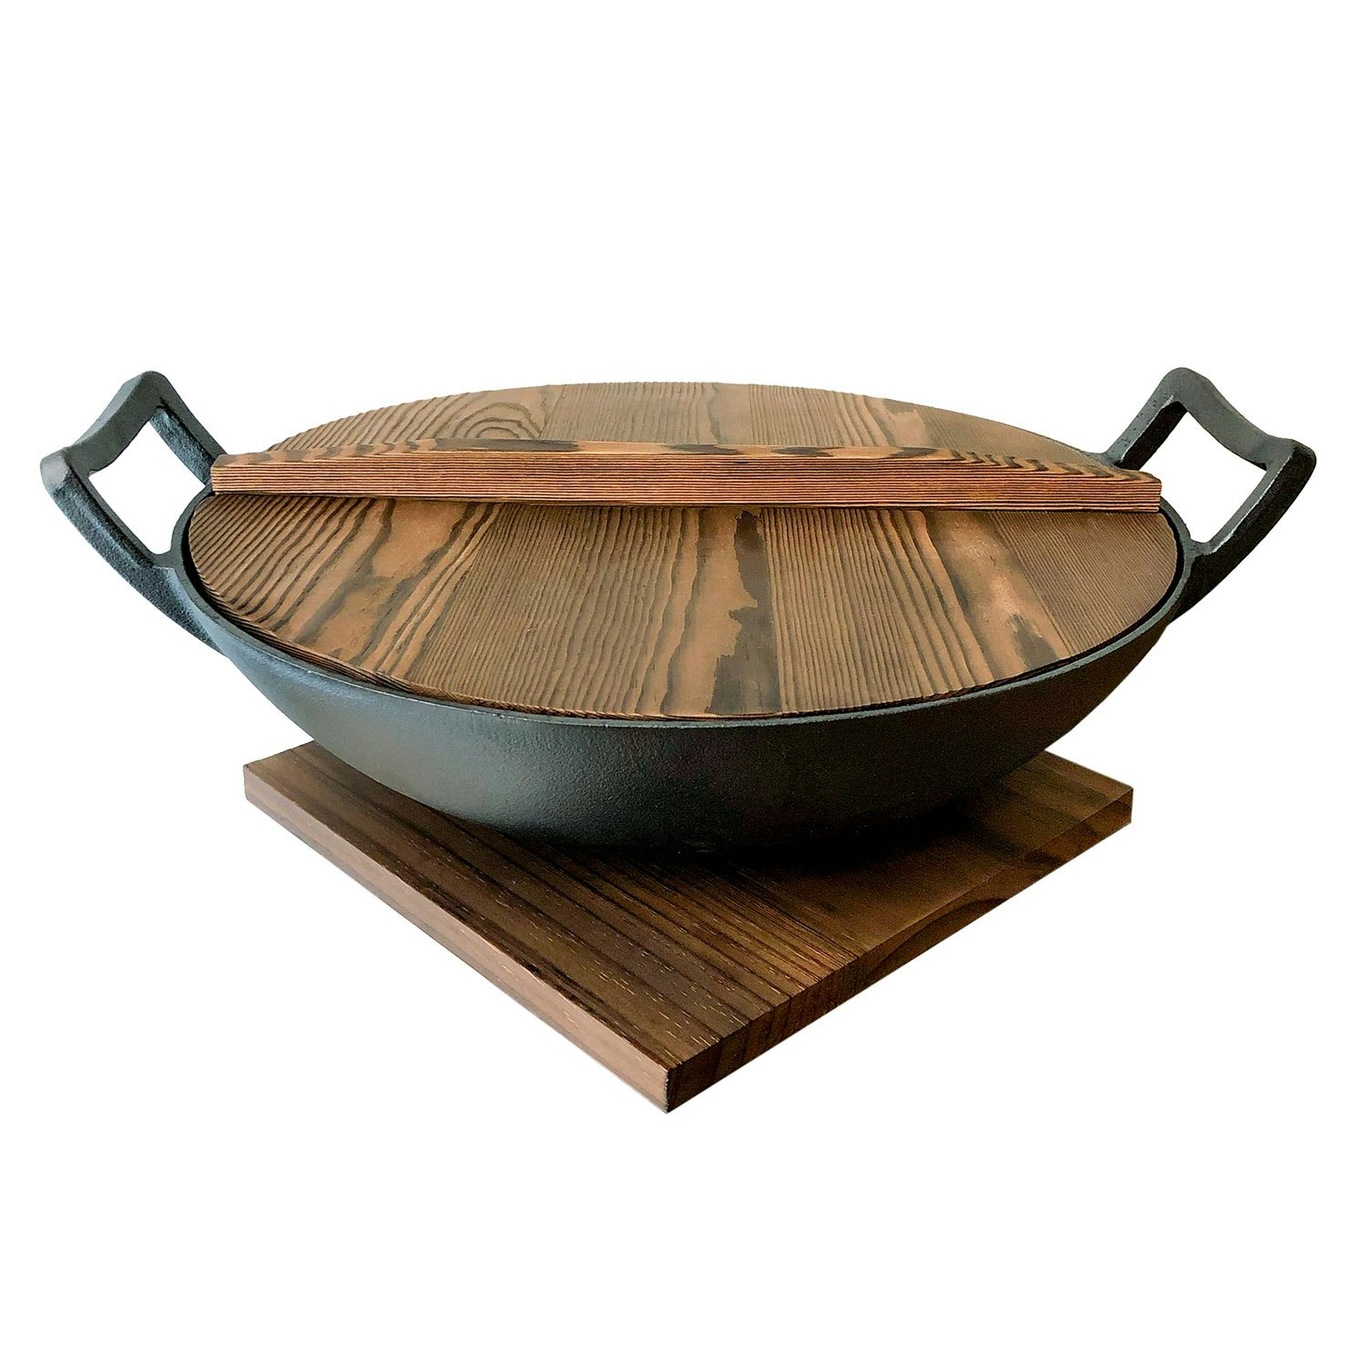 https://royaldesign.com/image/2/satake-nabe-cast-iron-wok-pan-with-wooden-lid-glass-lid-36-cm-6-l-0?w=800&quality=80